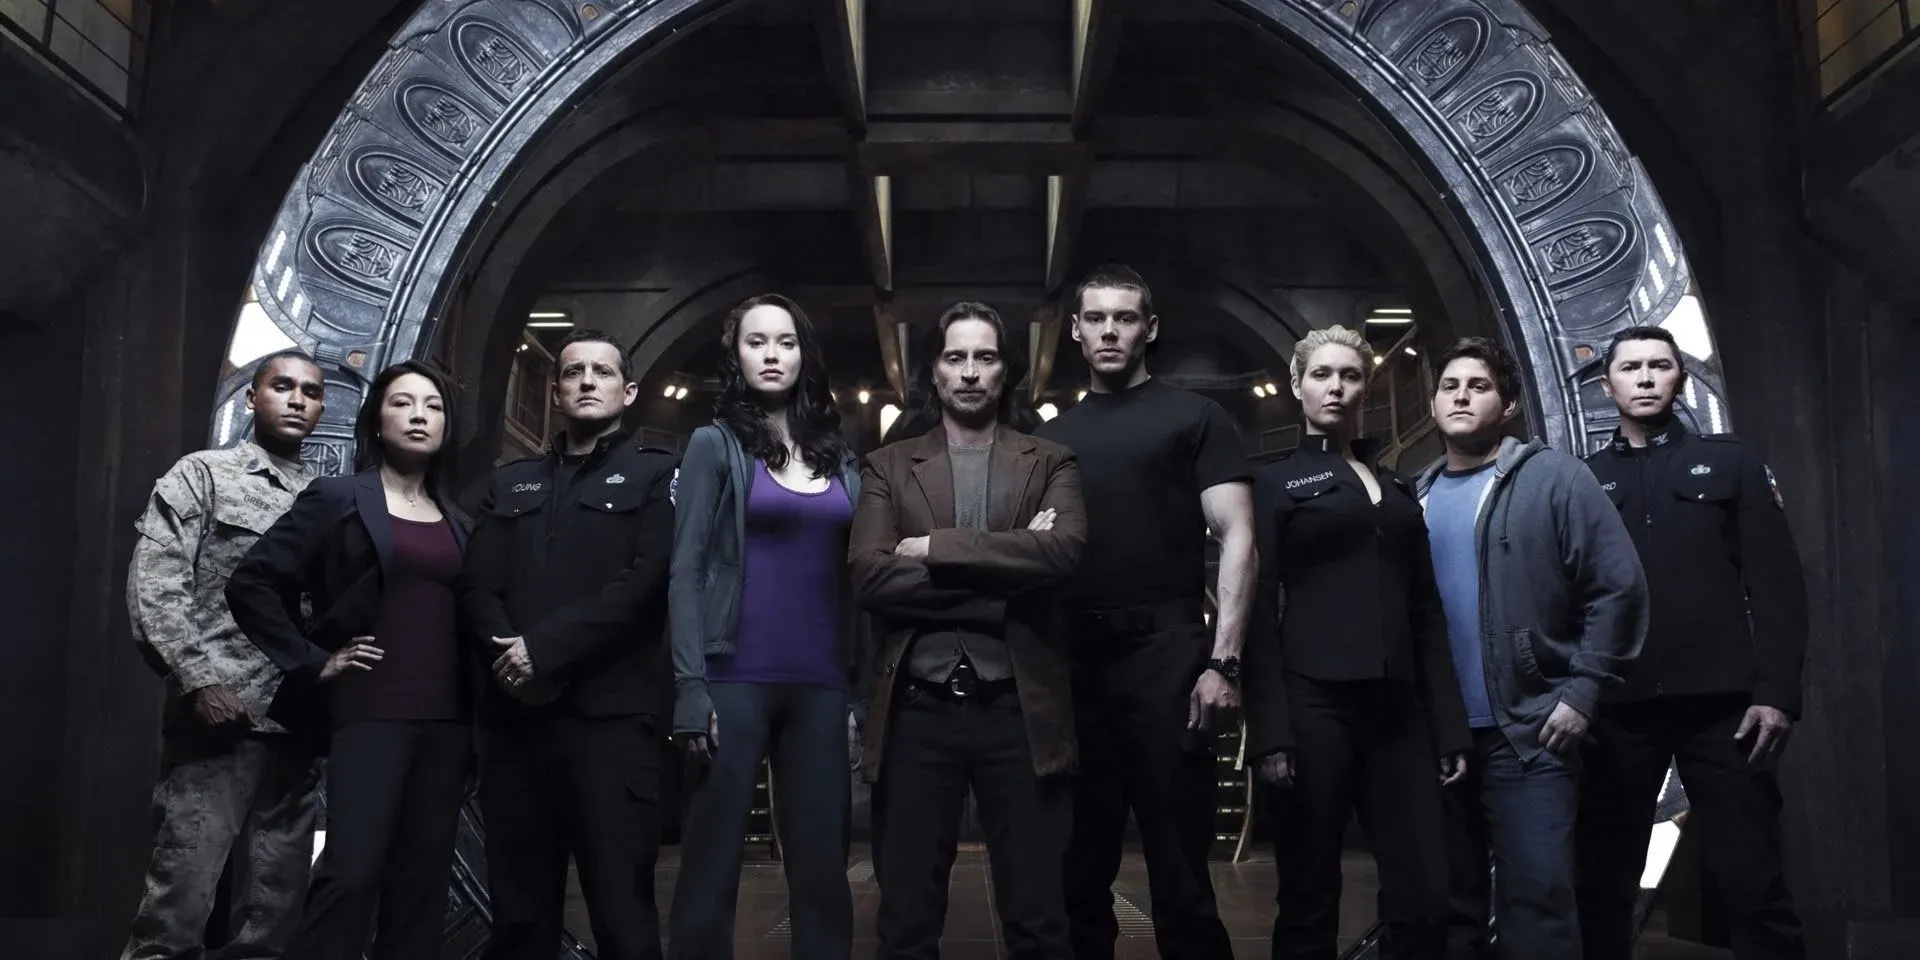 Stargate Universe cast on board the ship Destiny